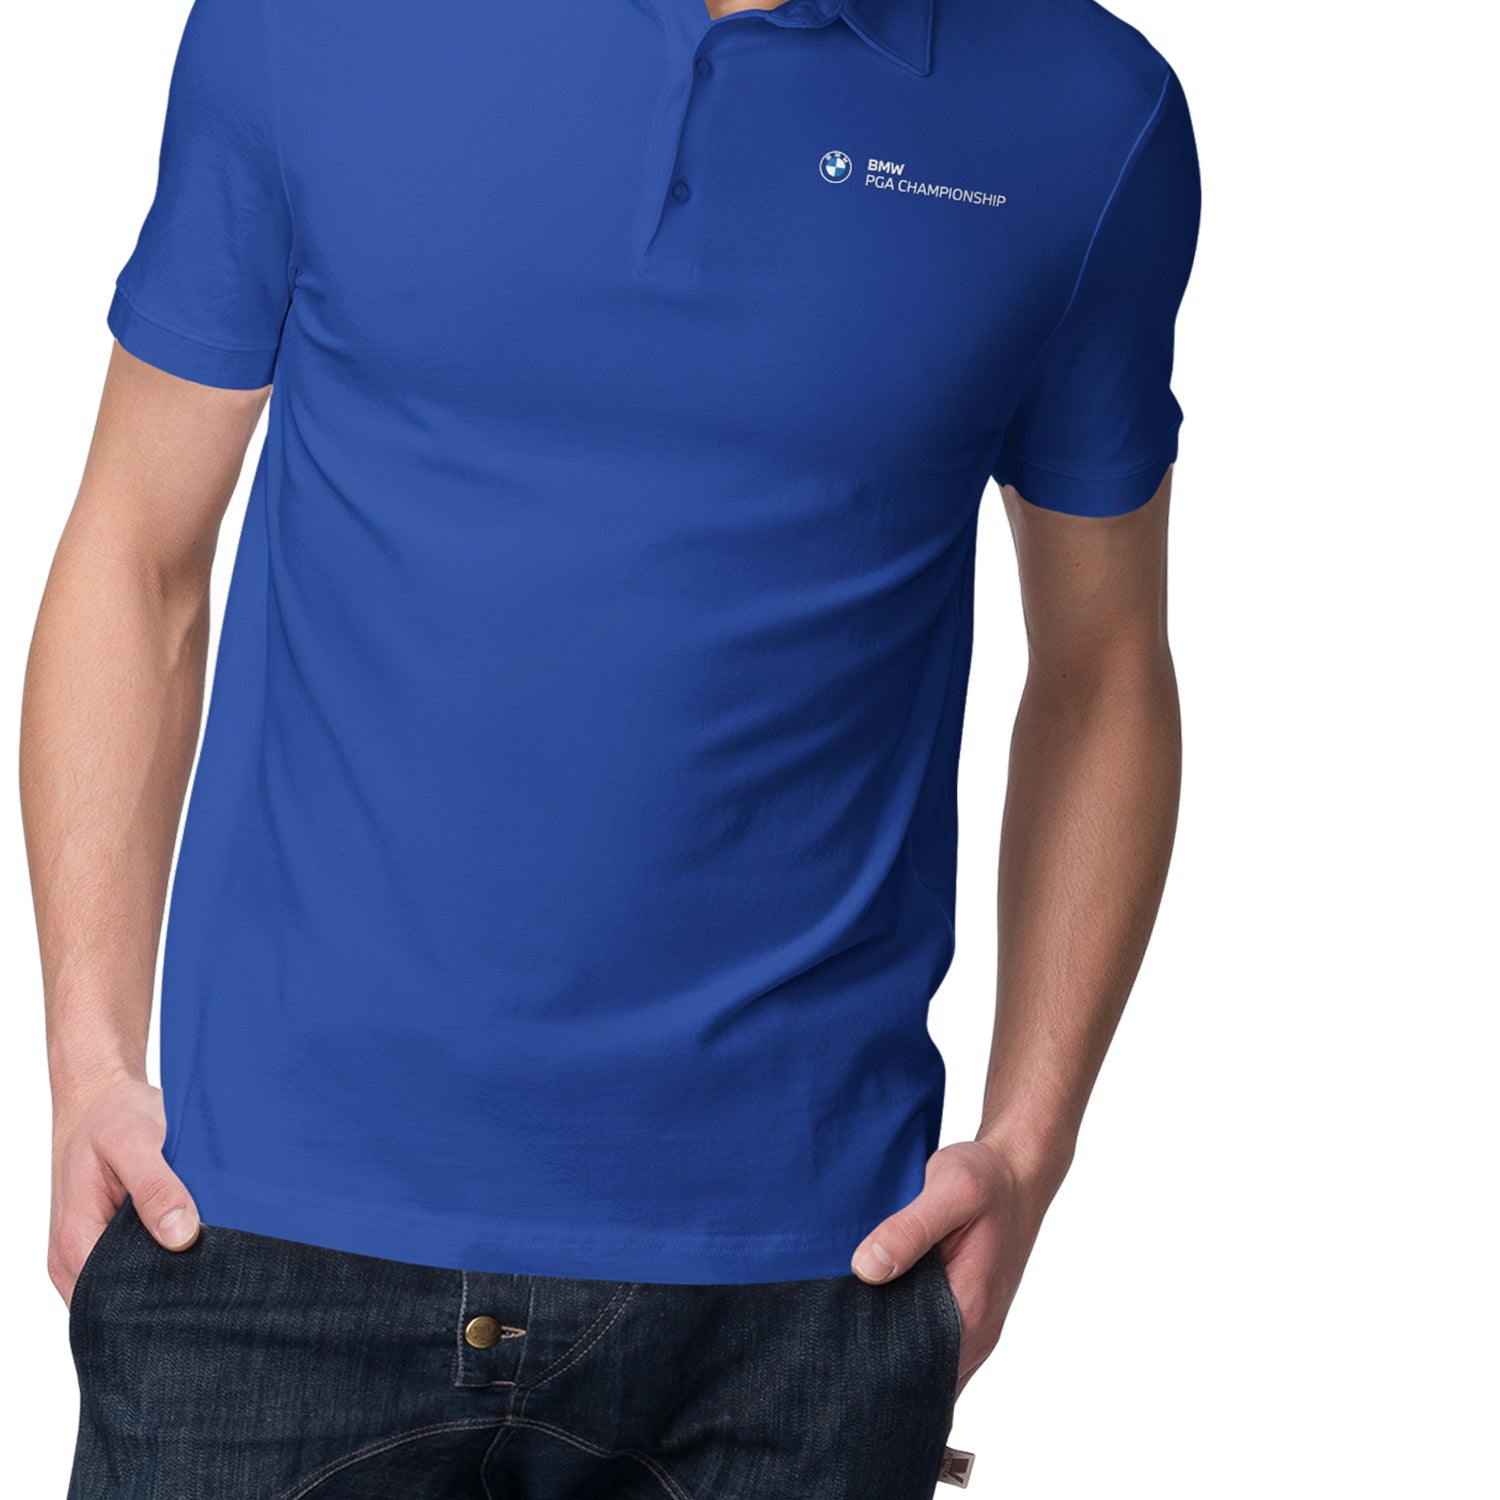 BMW PGA Championship Men's Royal Blue Polo Shirt - Front